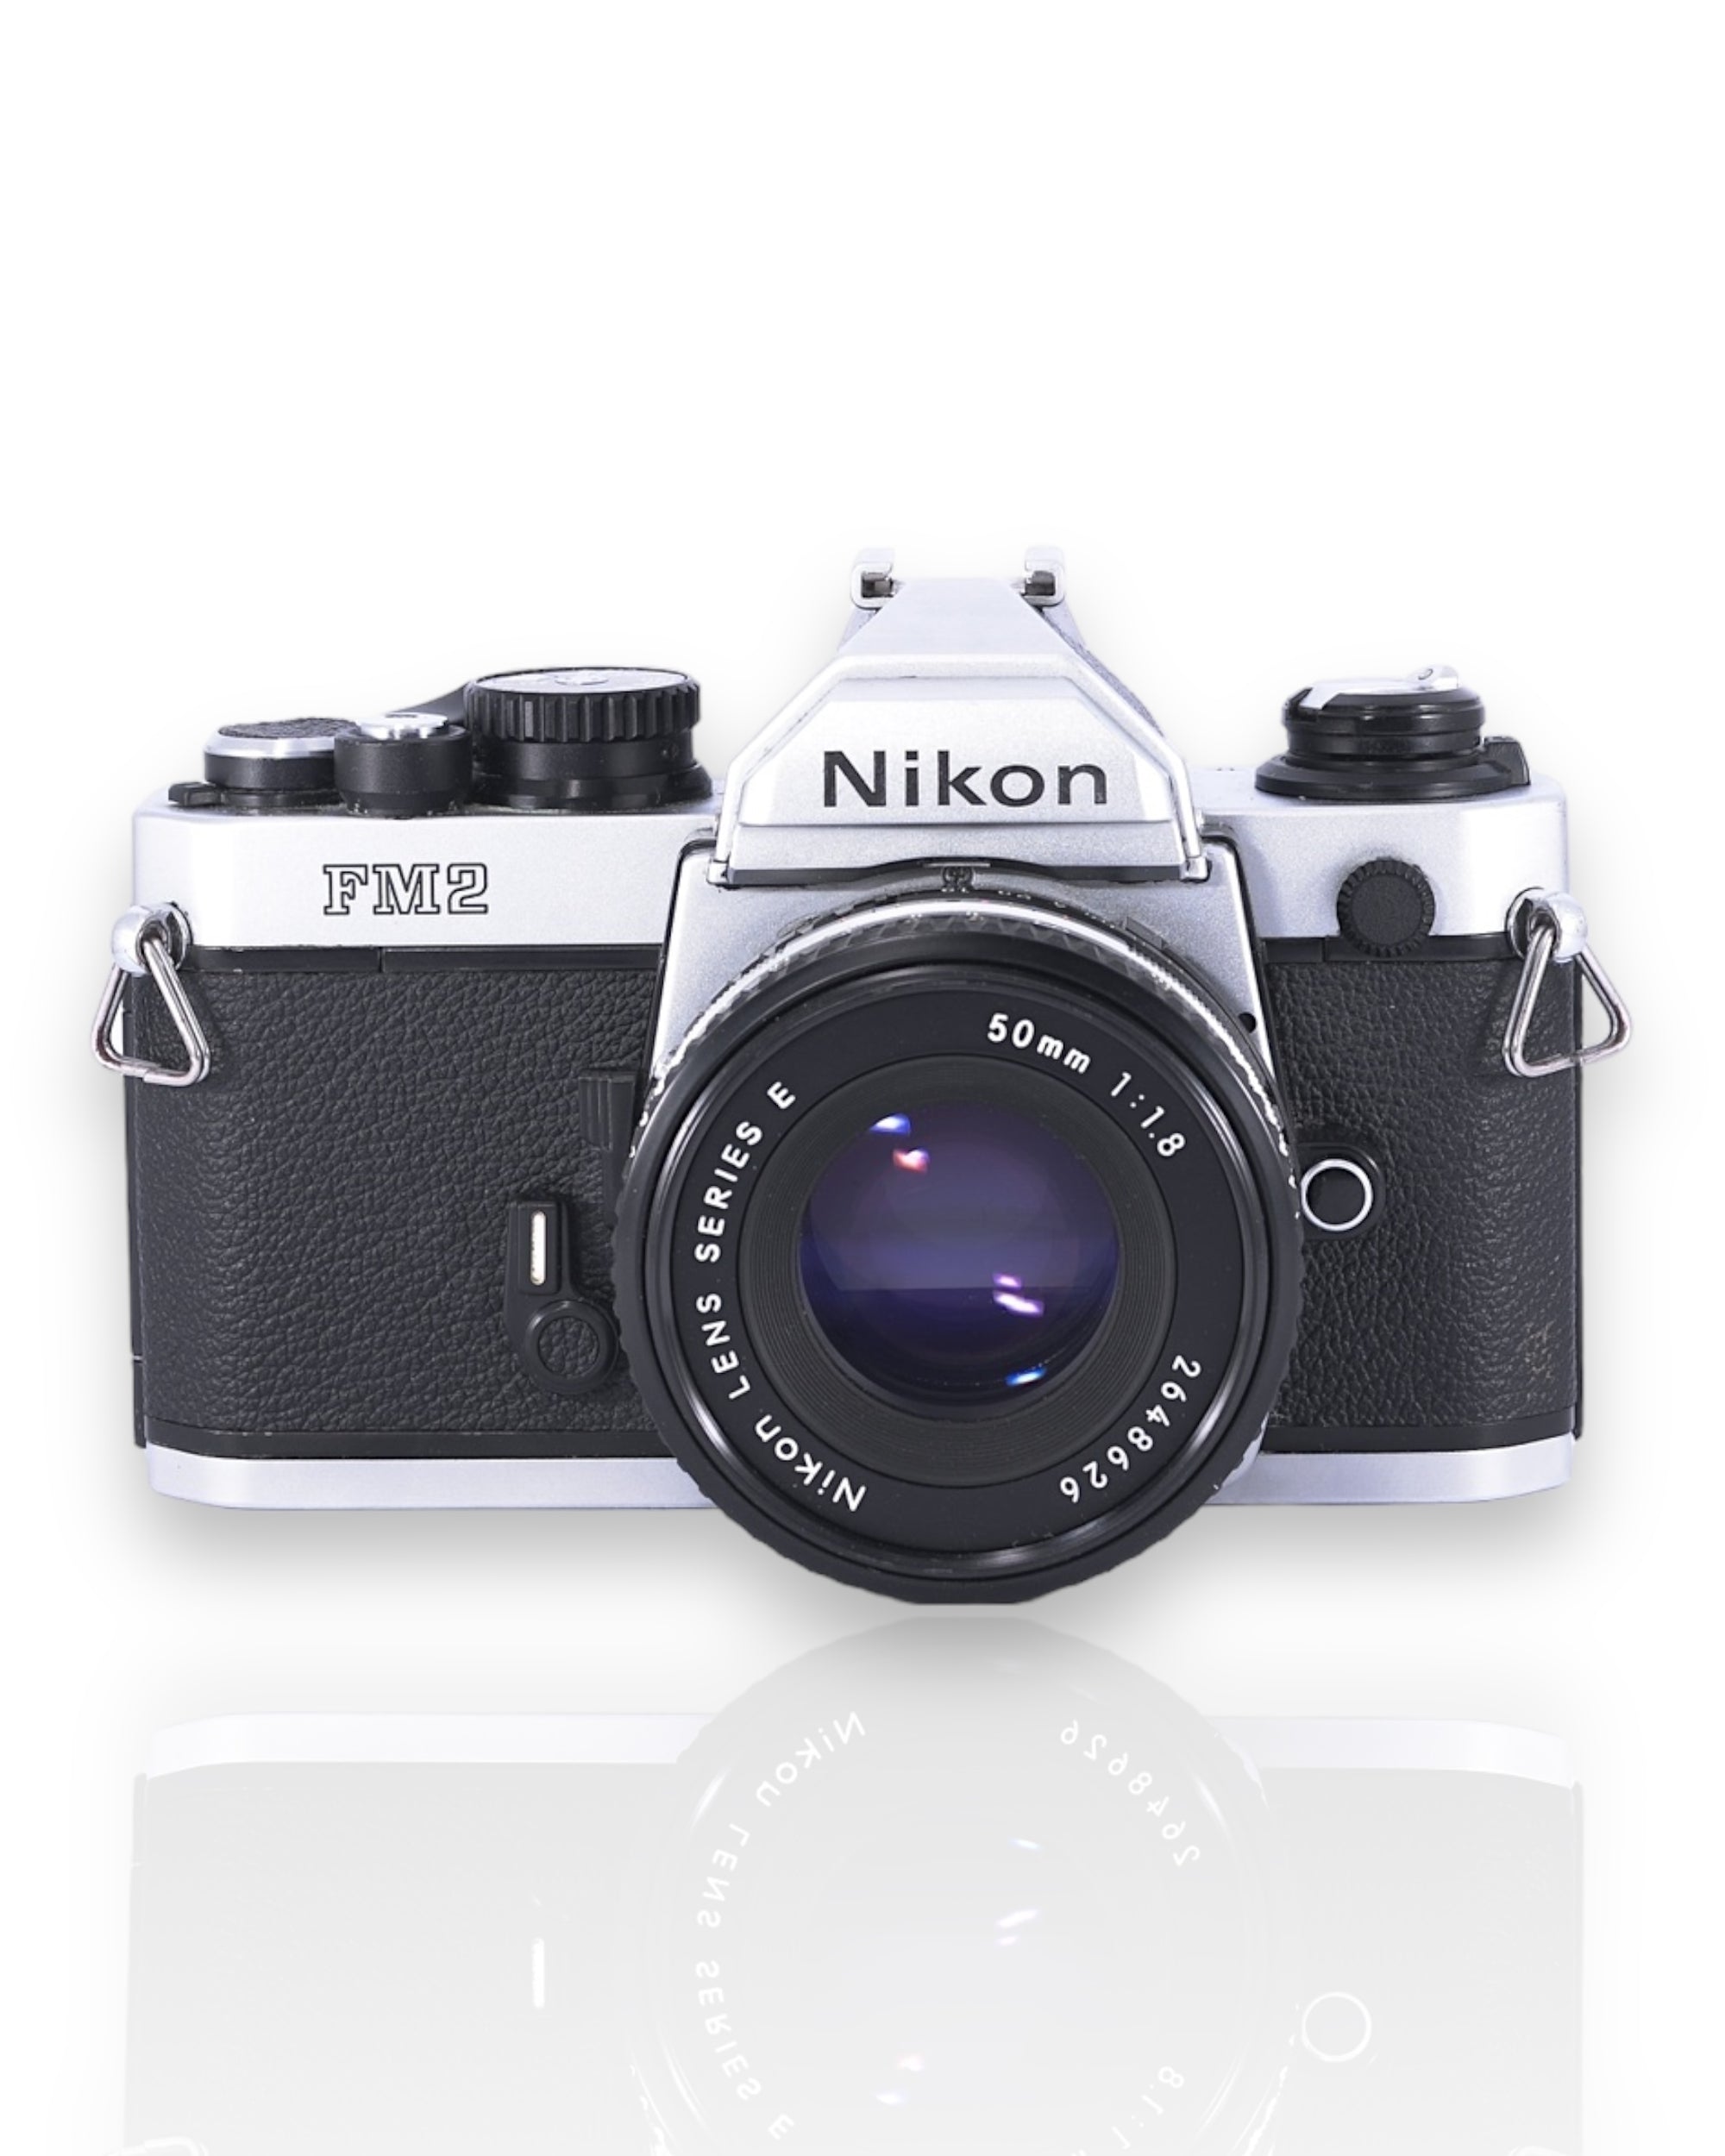 Nikon FM2N 35mm SLR film camera with 50mm f1.8